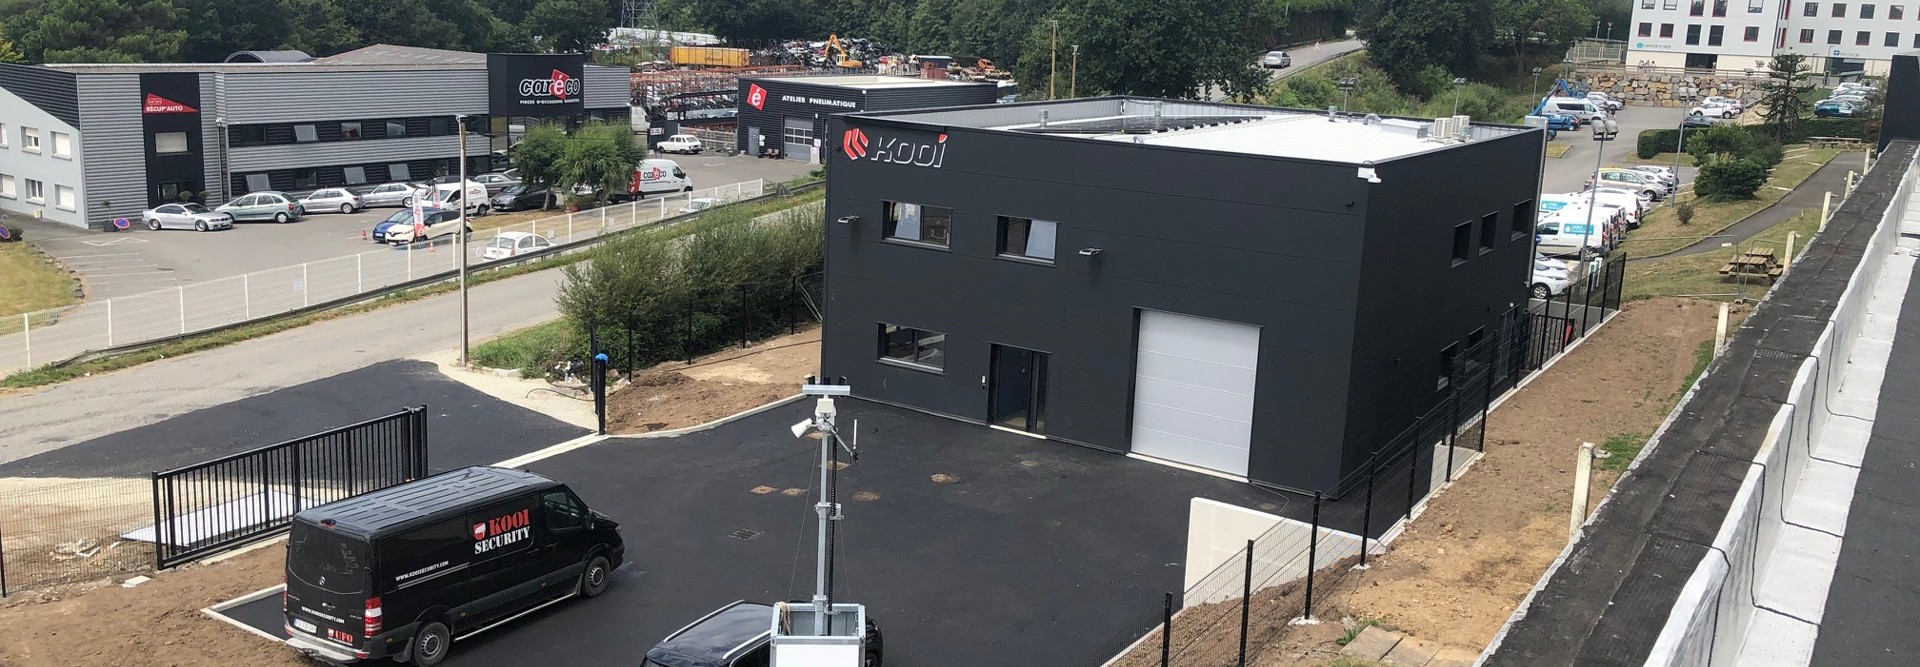 Kooi Opens New Office In France